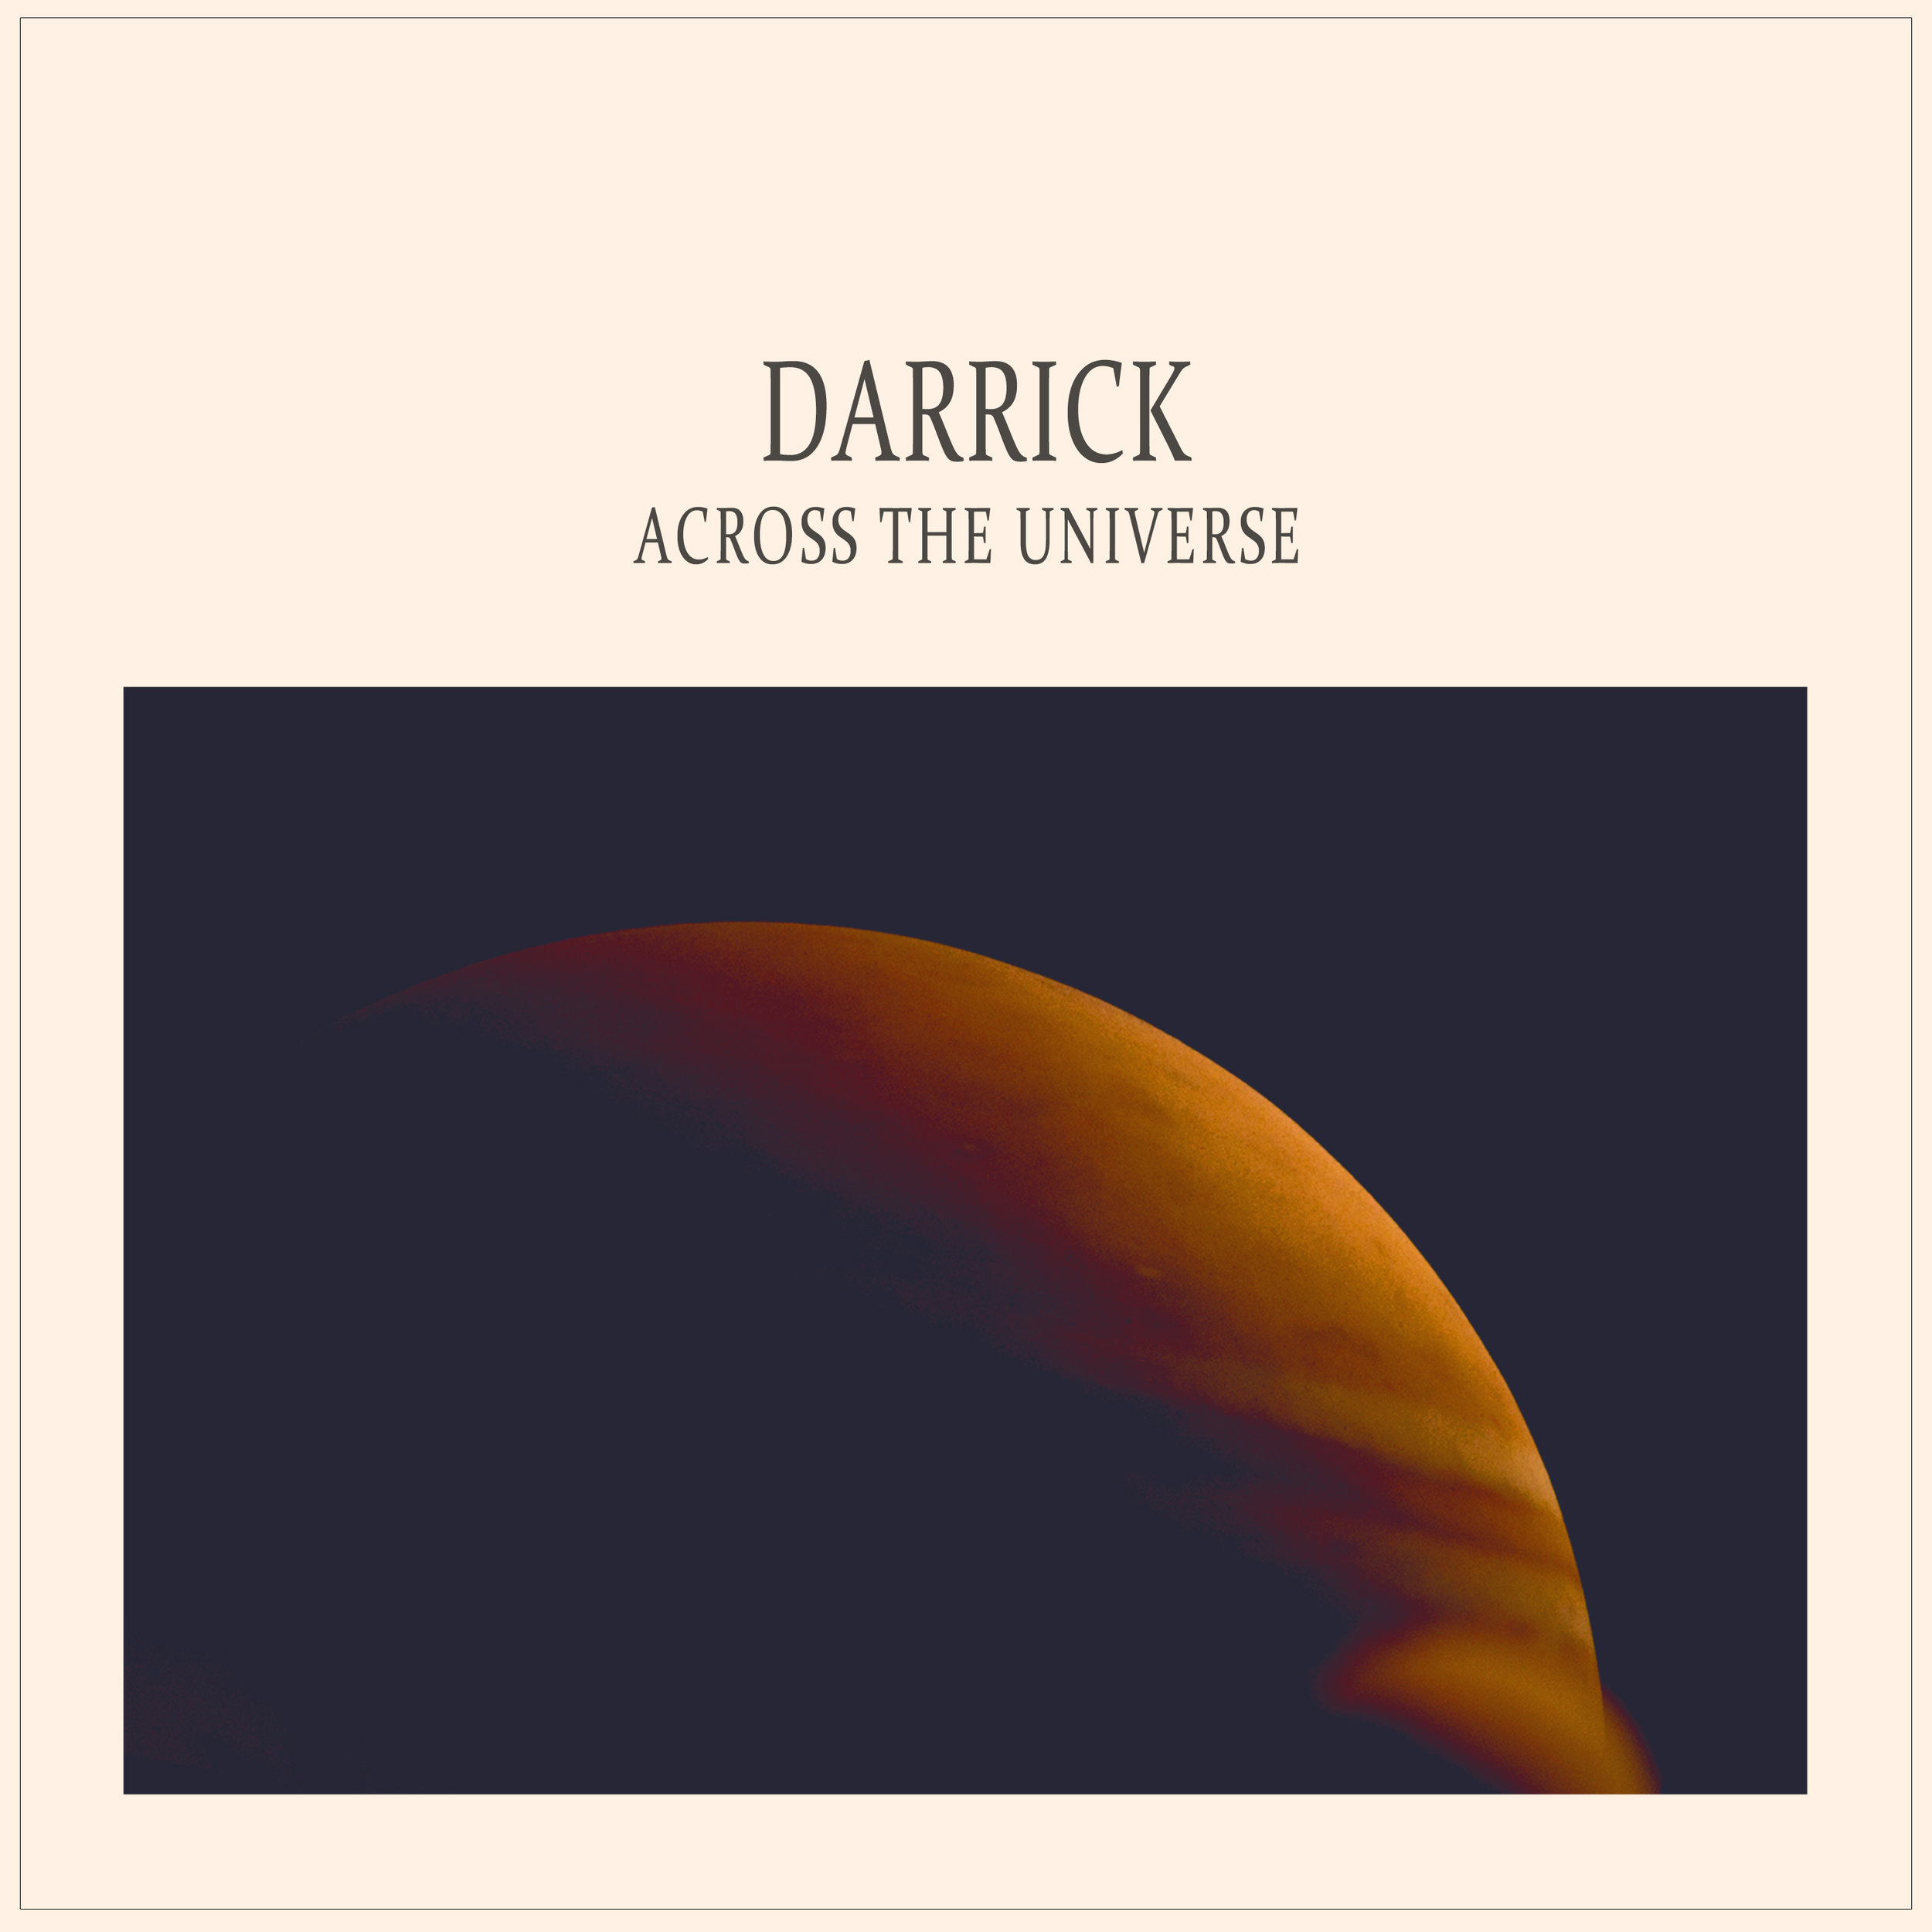 Darrick-across the universe itunes.JPG